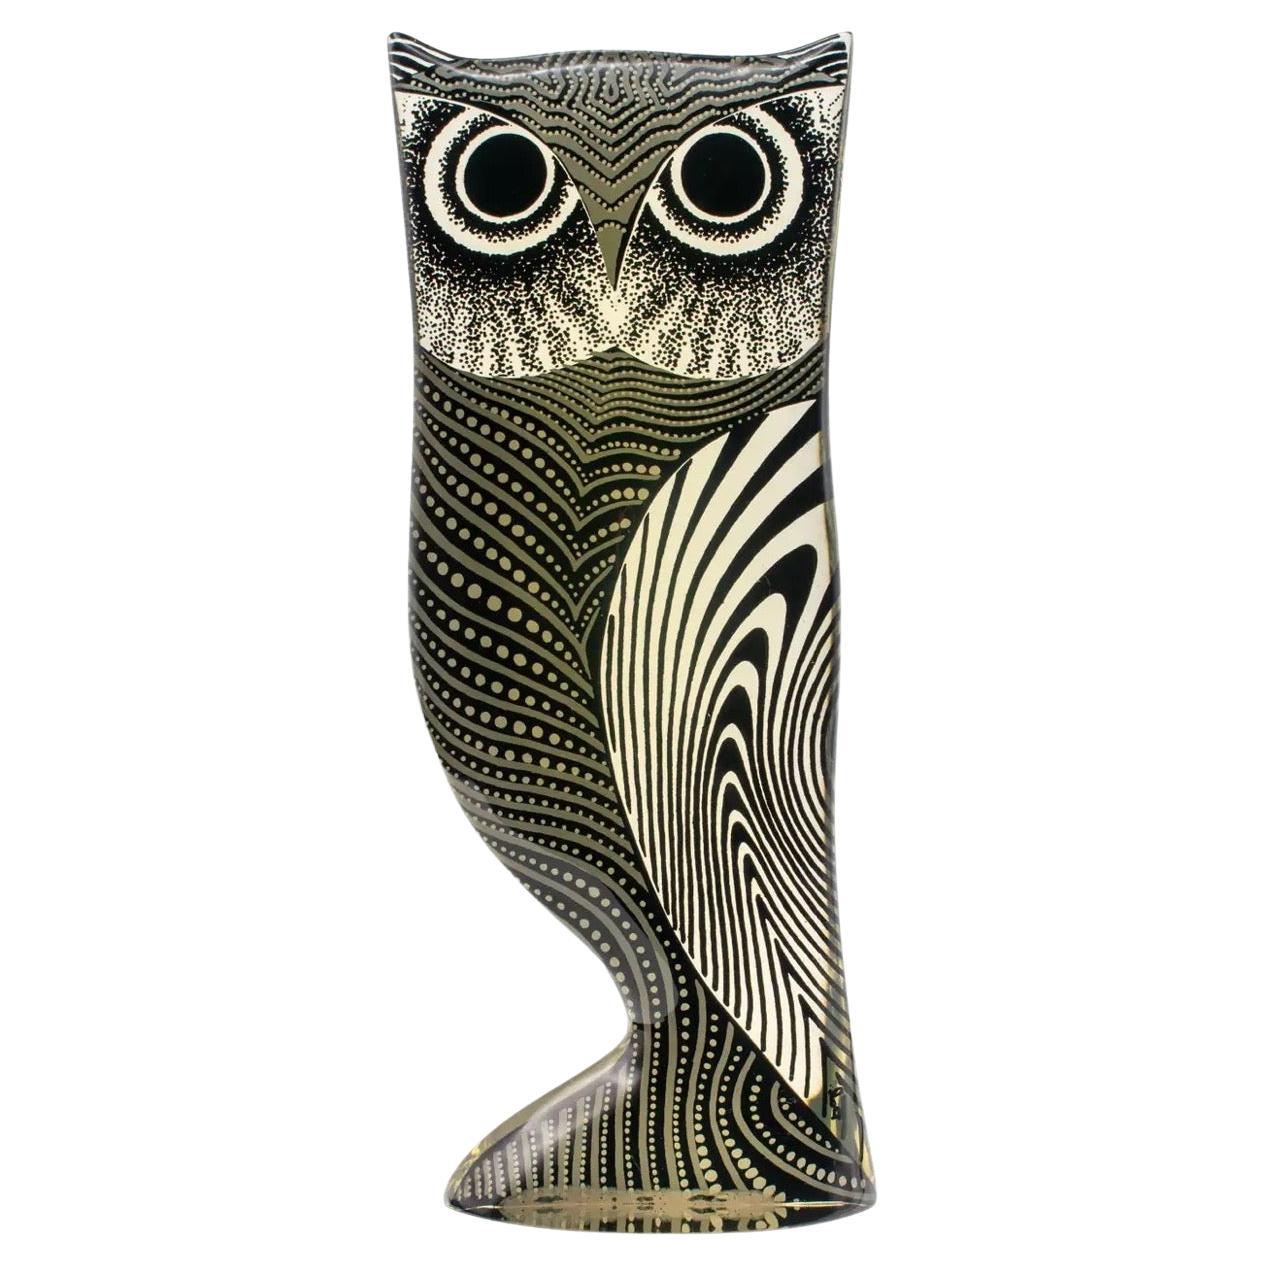 Abraham Palatnik, Owl, Kinetic sculpture in acrylic resin. Brazil, c. 1970